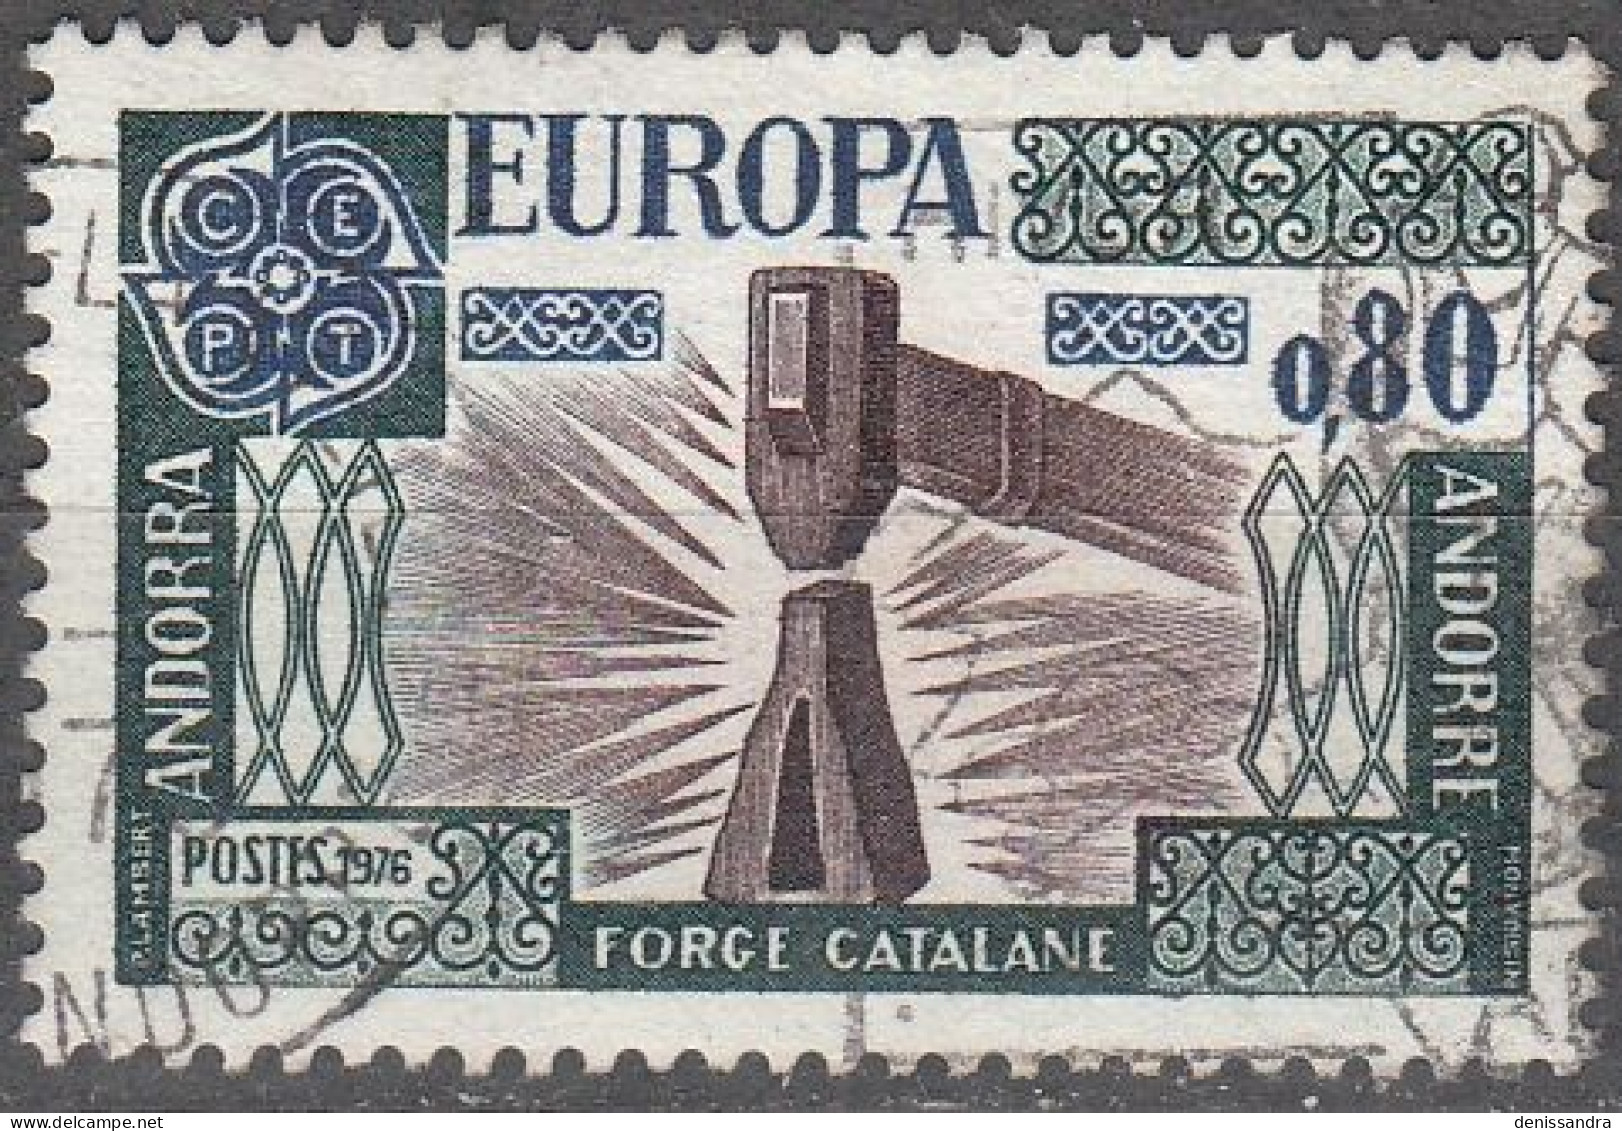 Andorre Français 1976 Michel 274 O Cote (2008) 1.50 € Europa CEPT La Forge Catalane Cachet Rond - Used Stamps